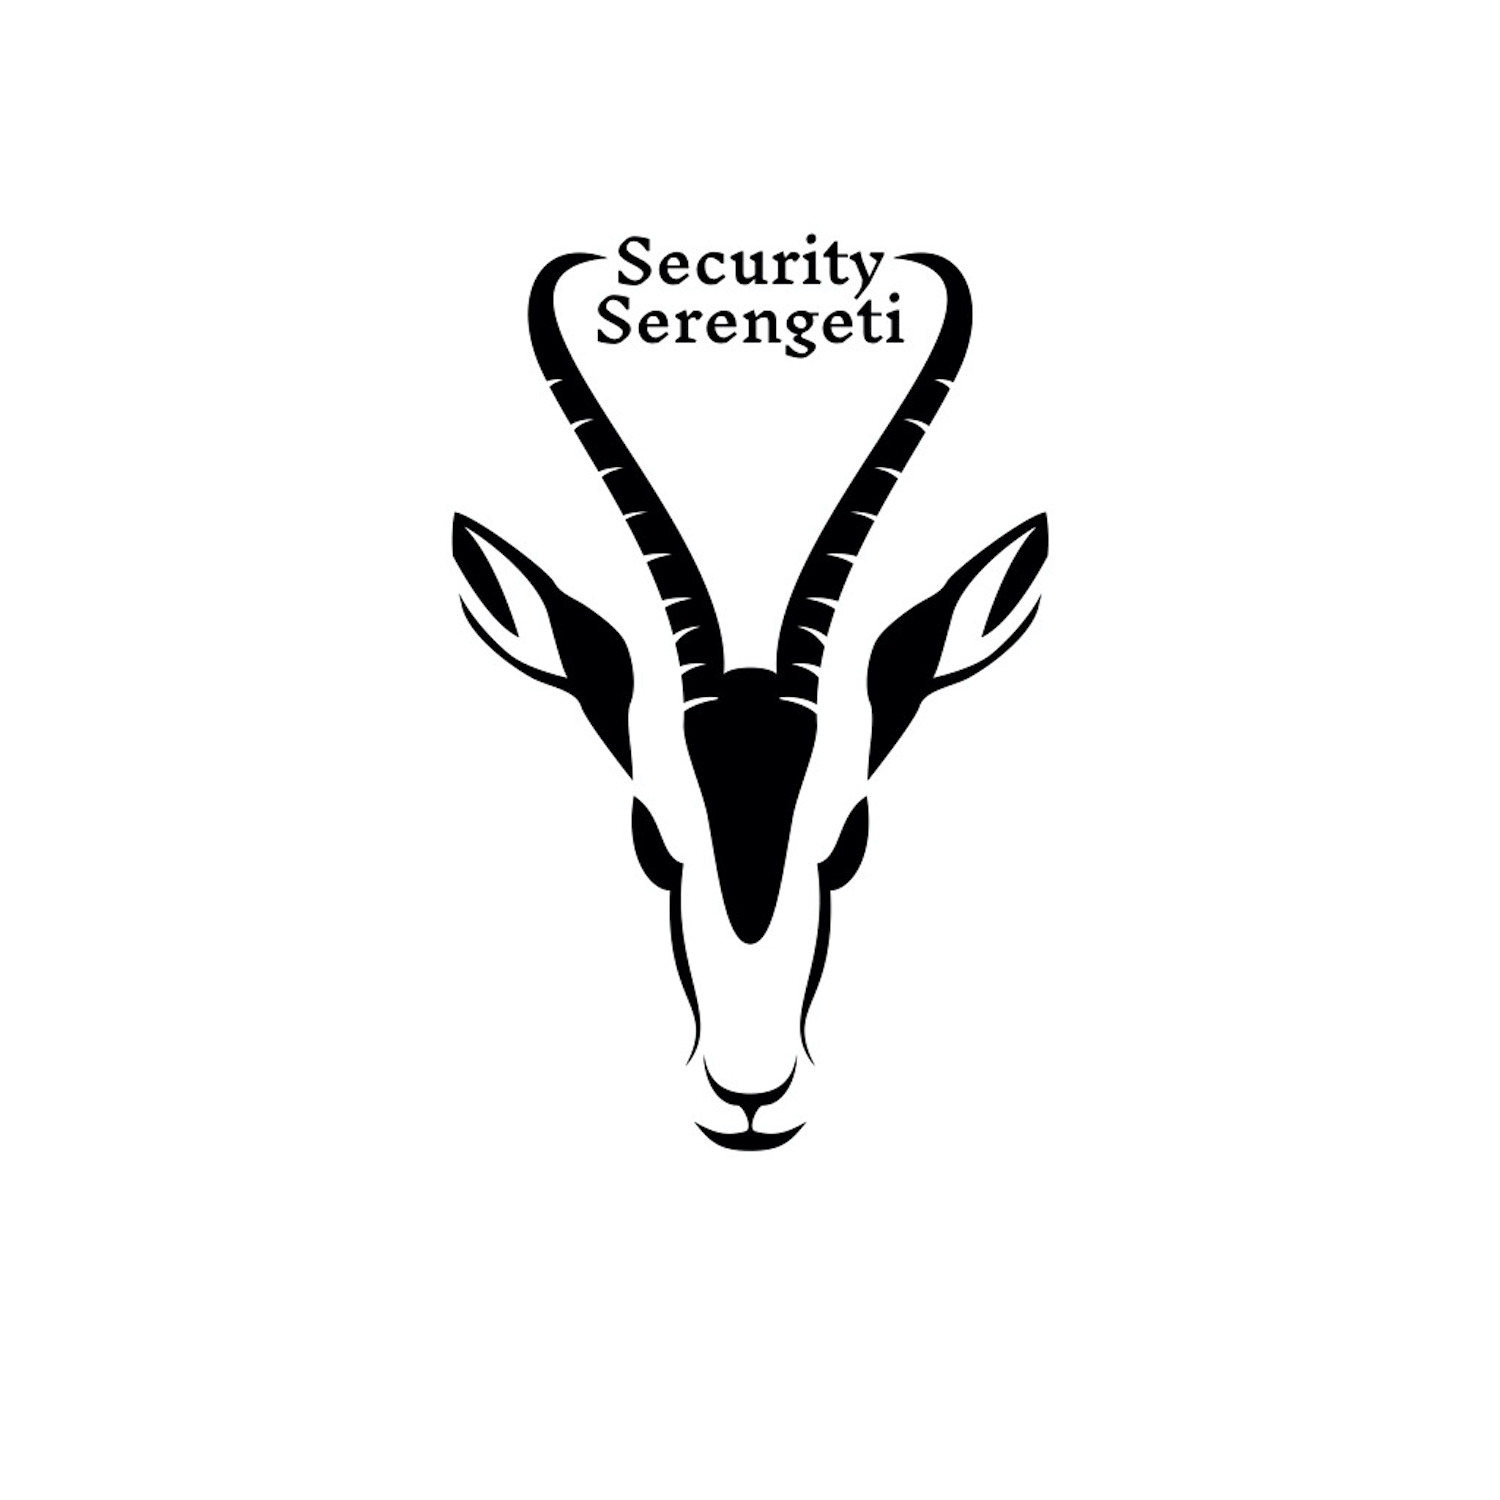 SS-SUBJ-019: Security 101 - CyberInsurance